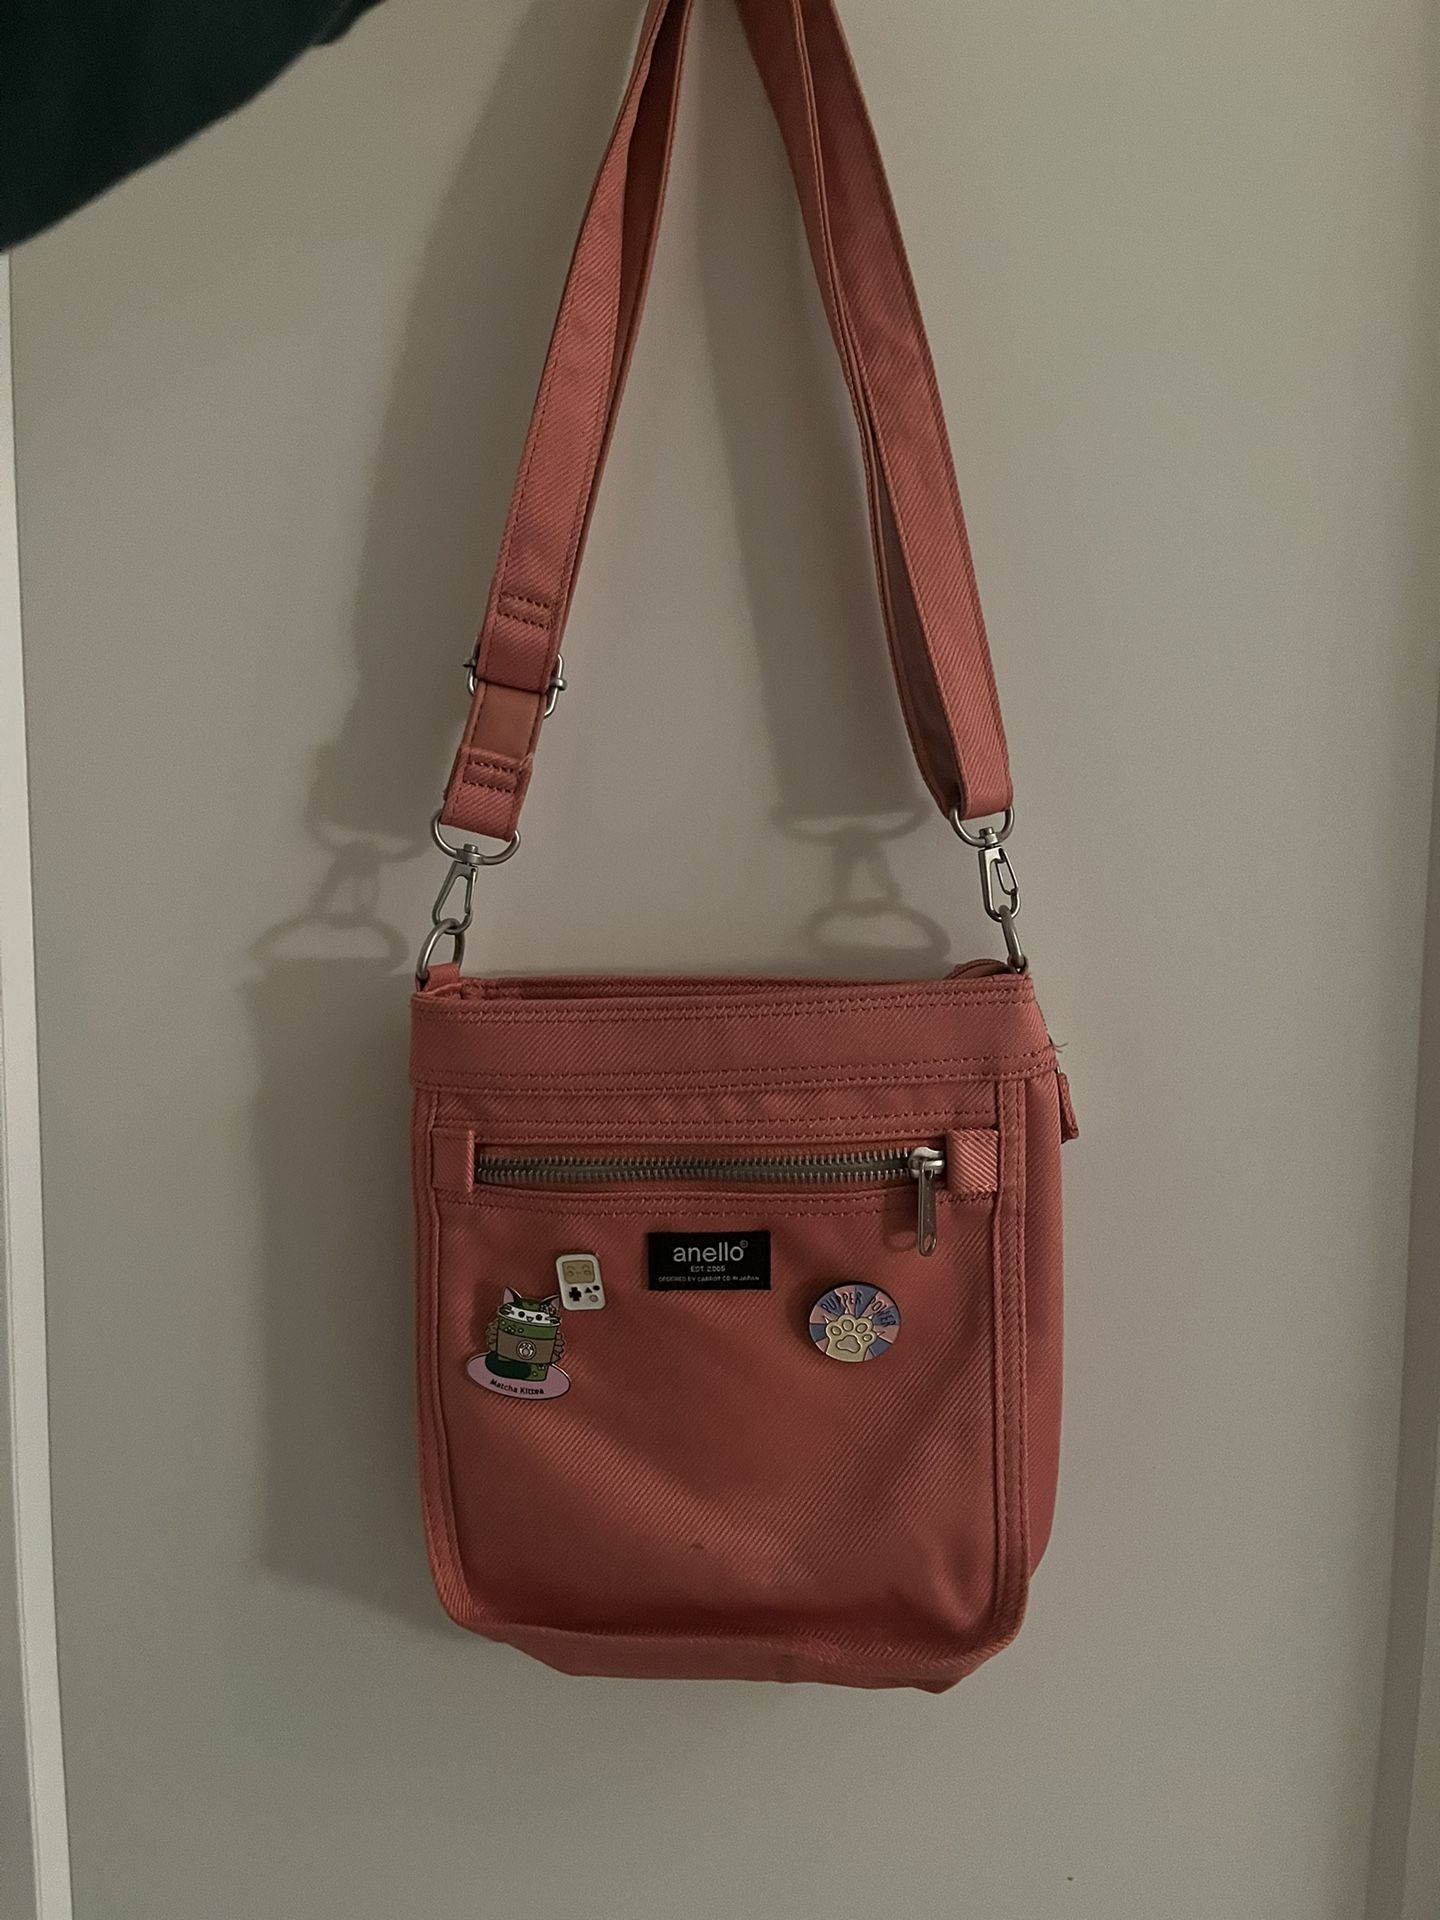 Anello Japanese Popular Brand Crossbody Bag Salmon /Pink Color